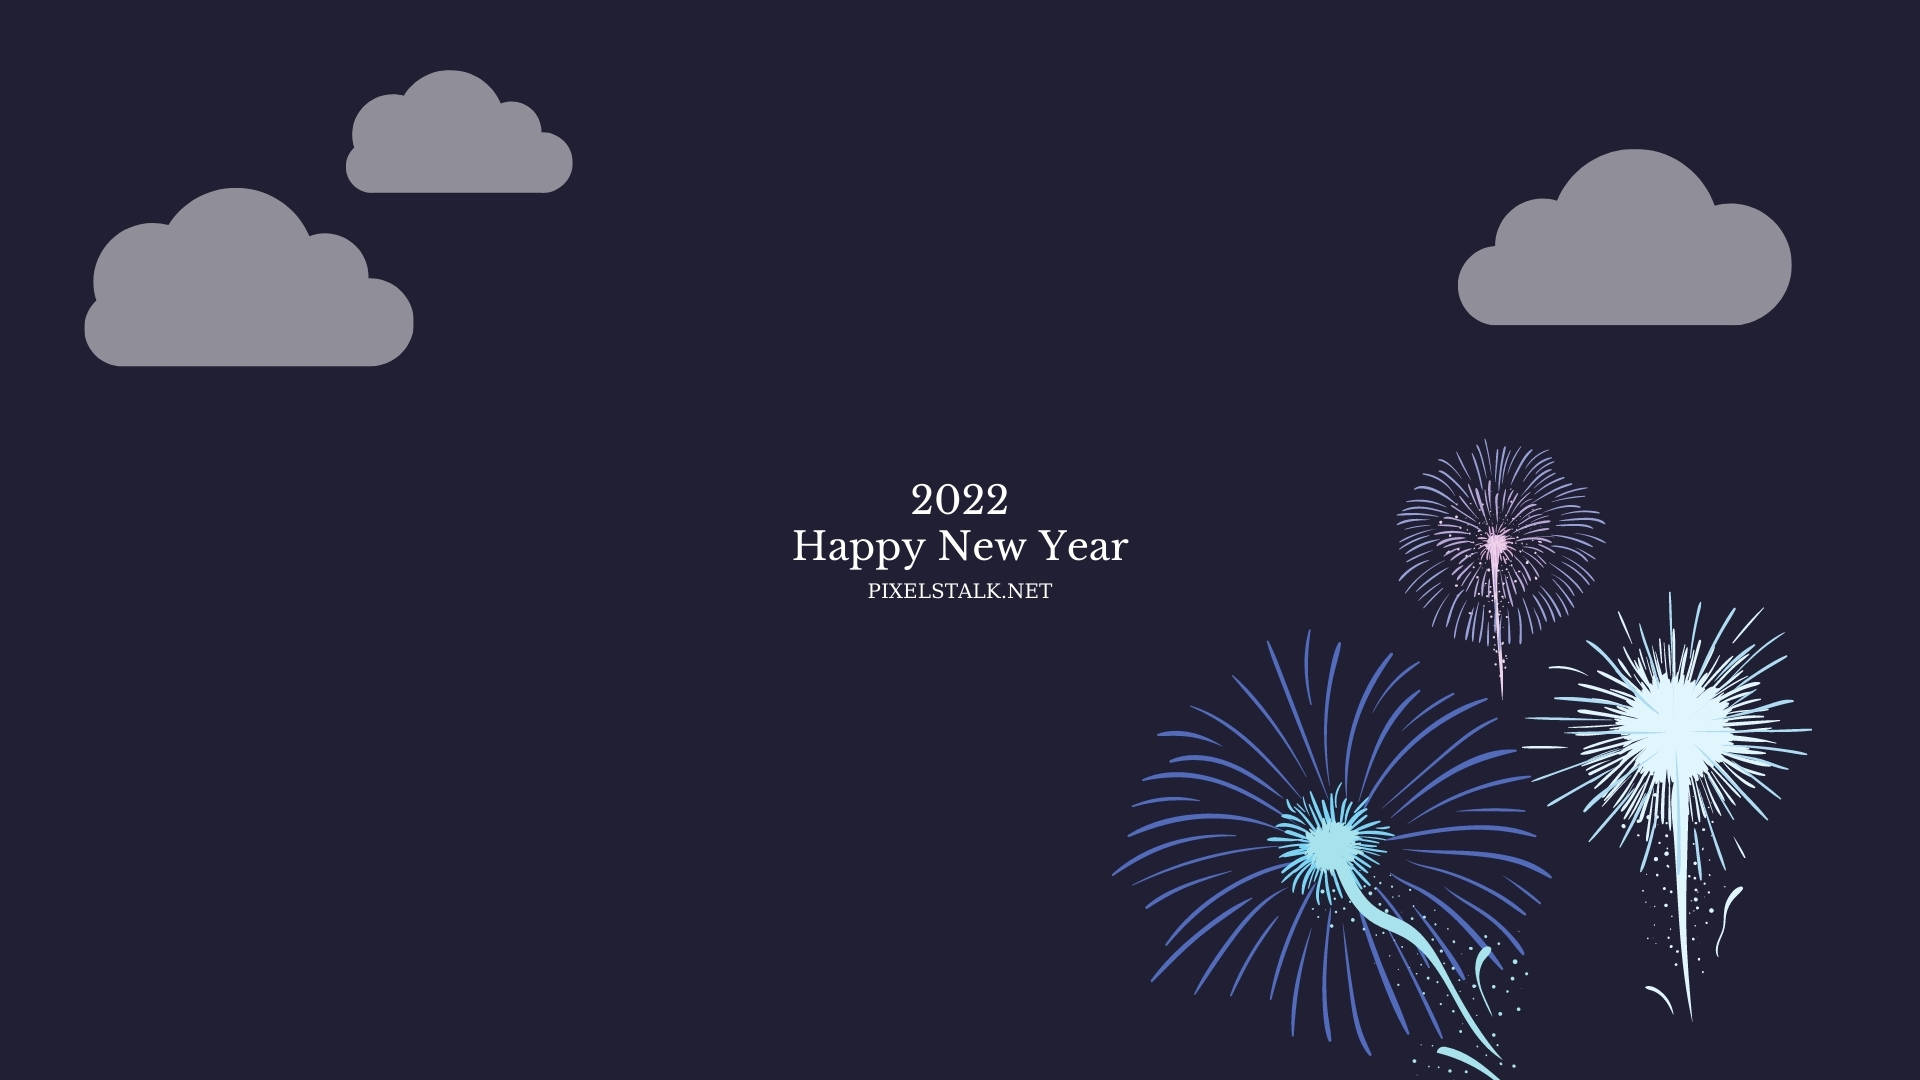 New Year 2022 Minimalist Greetings Background